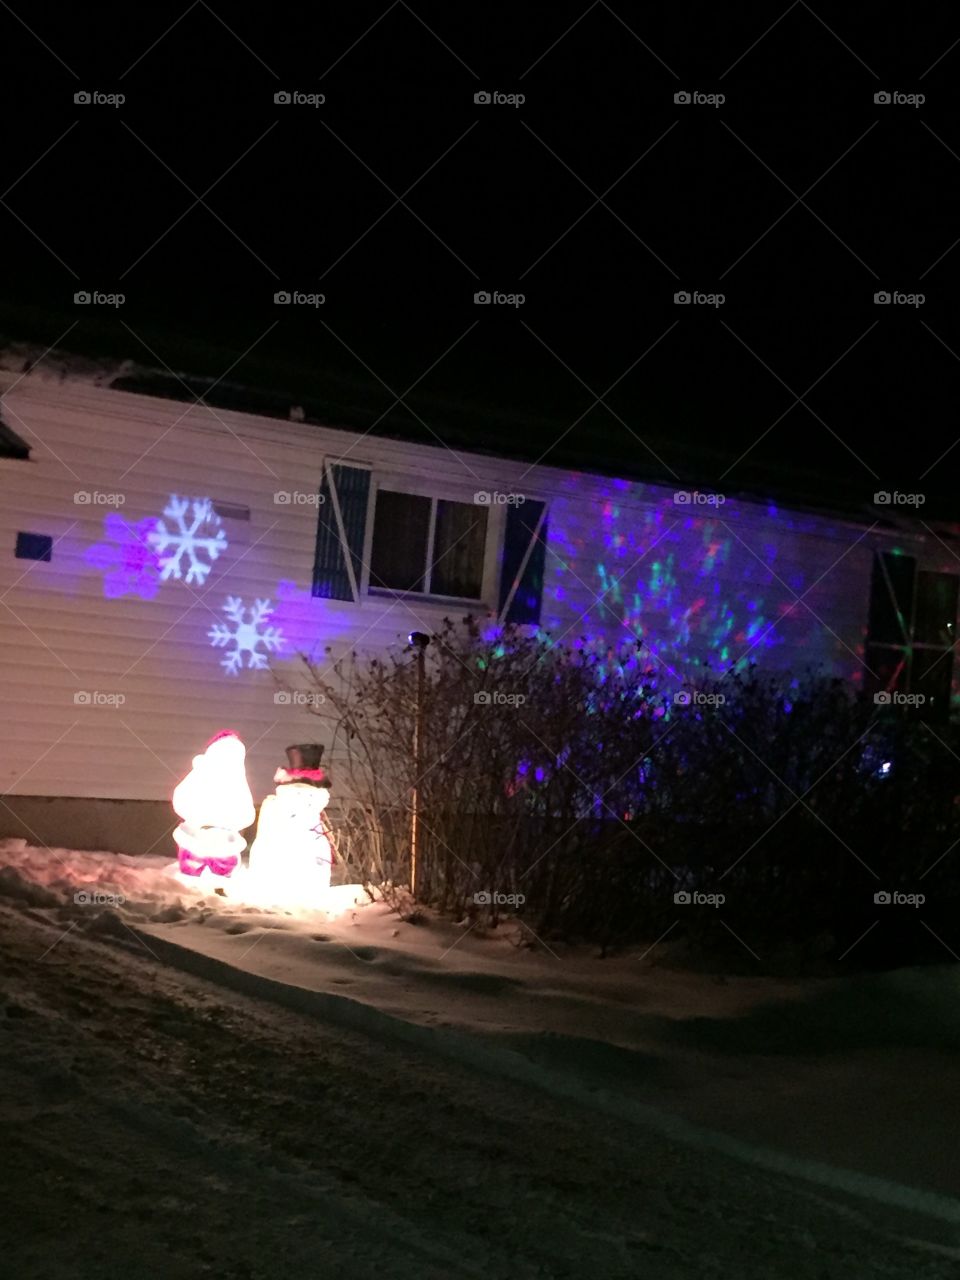 Small town Christmas charm snowman Santa Claus purple lights dancing on the house